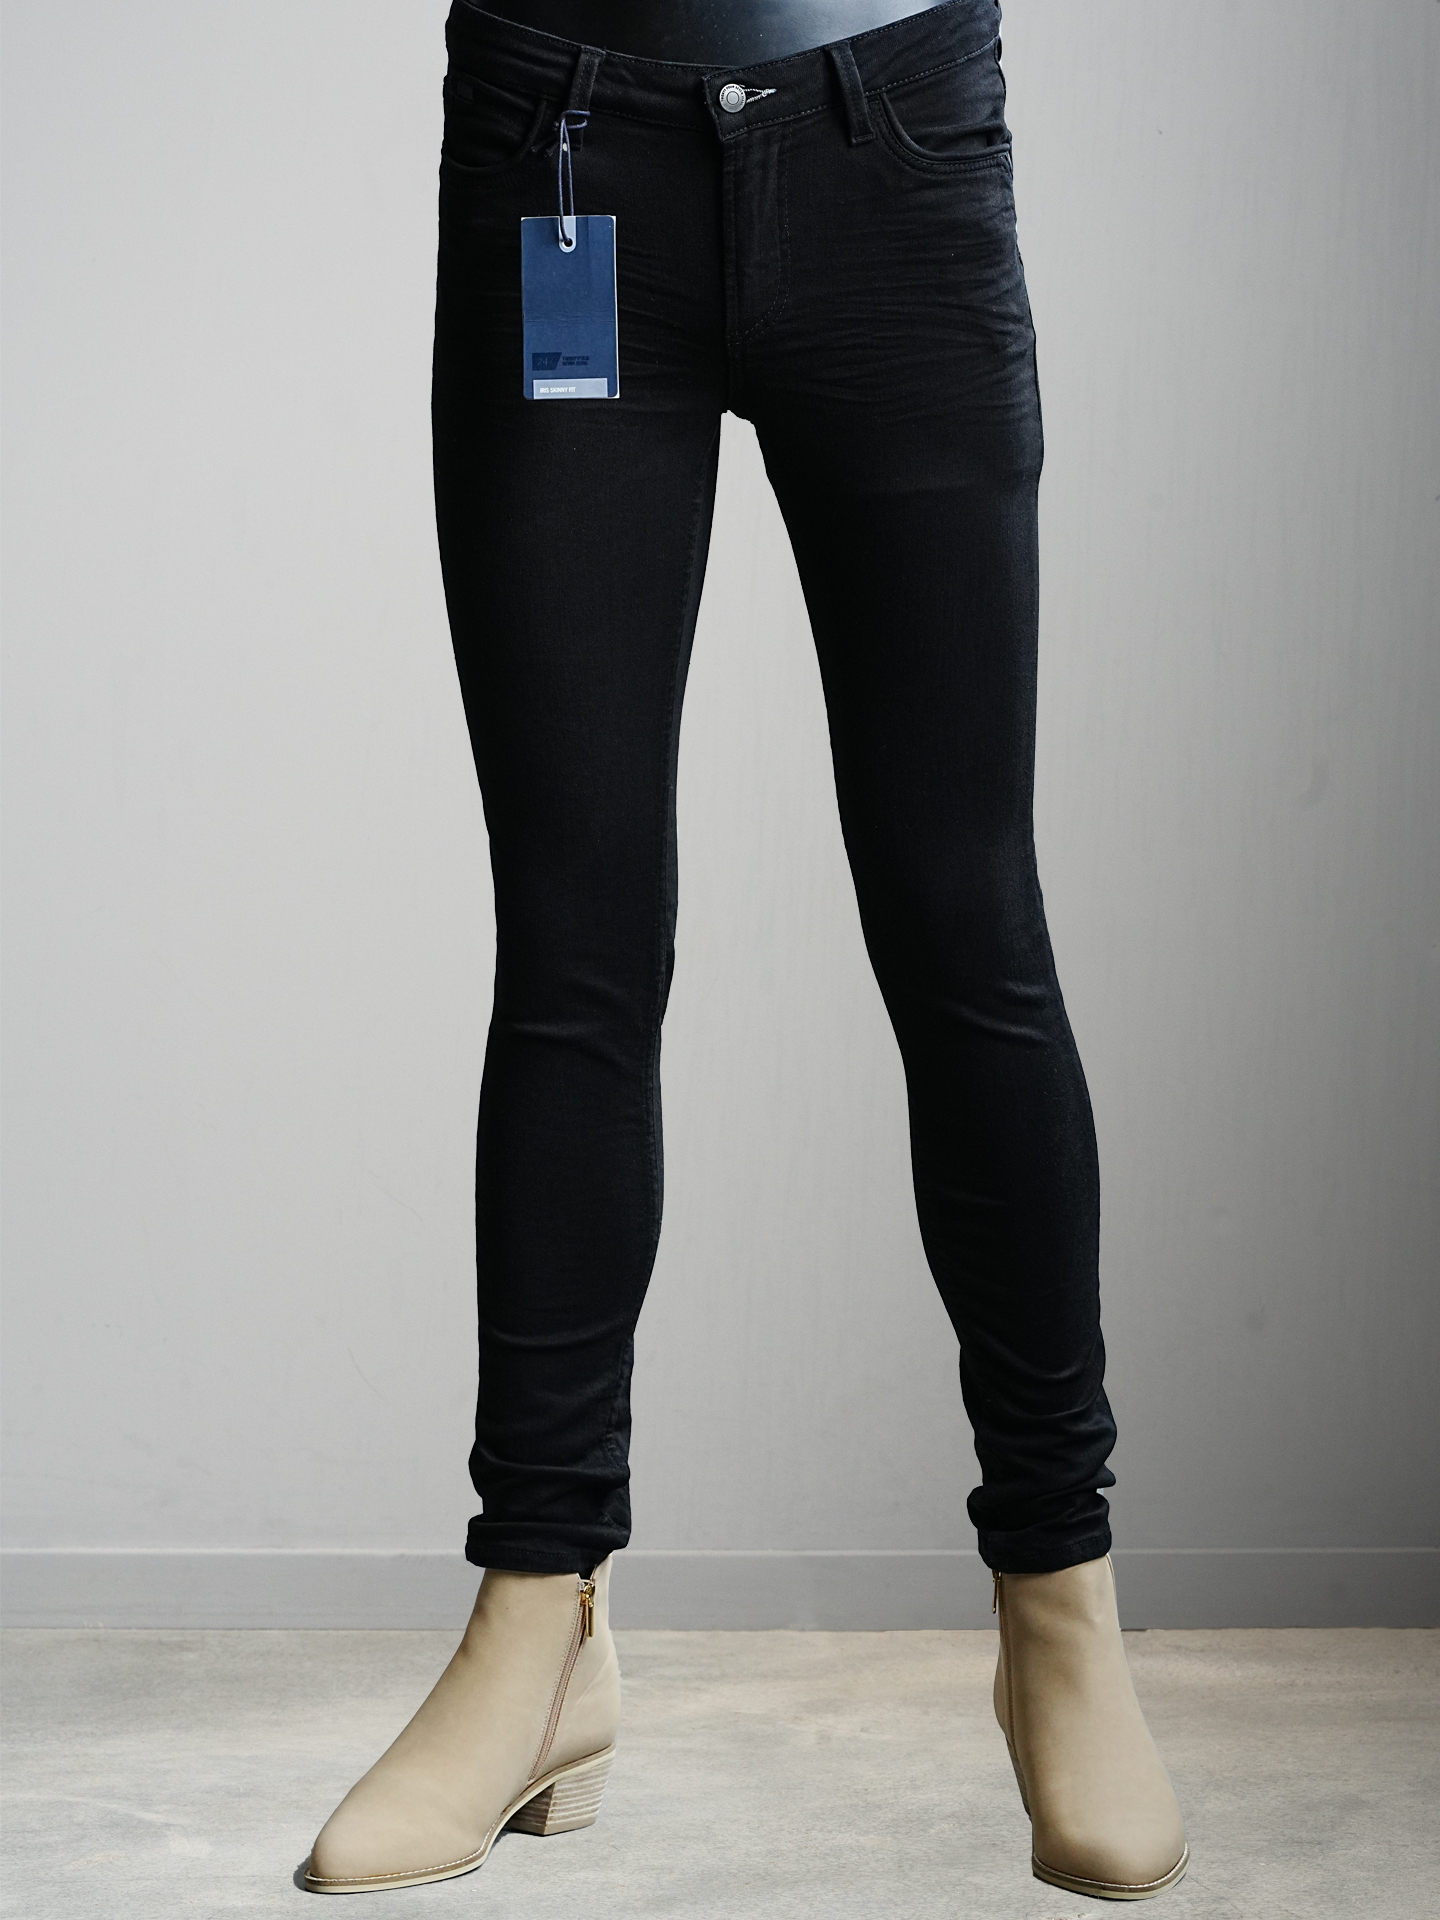 Nadenkend Republiek mechanisme Dames jeans, jeans dames, jeans vrouwen | 247jeans.com